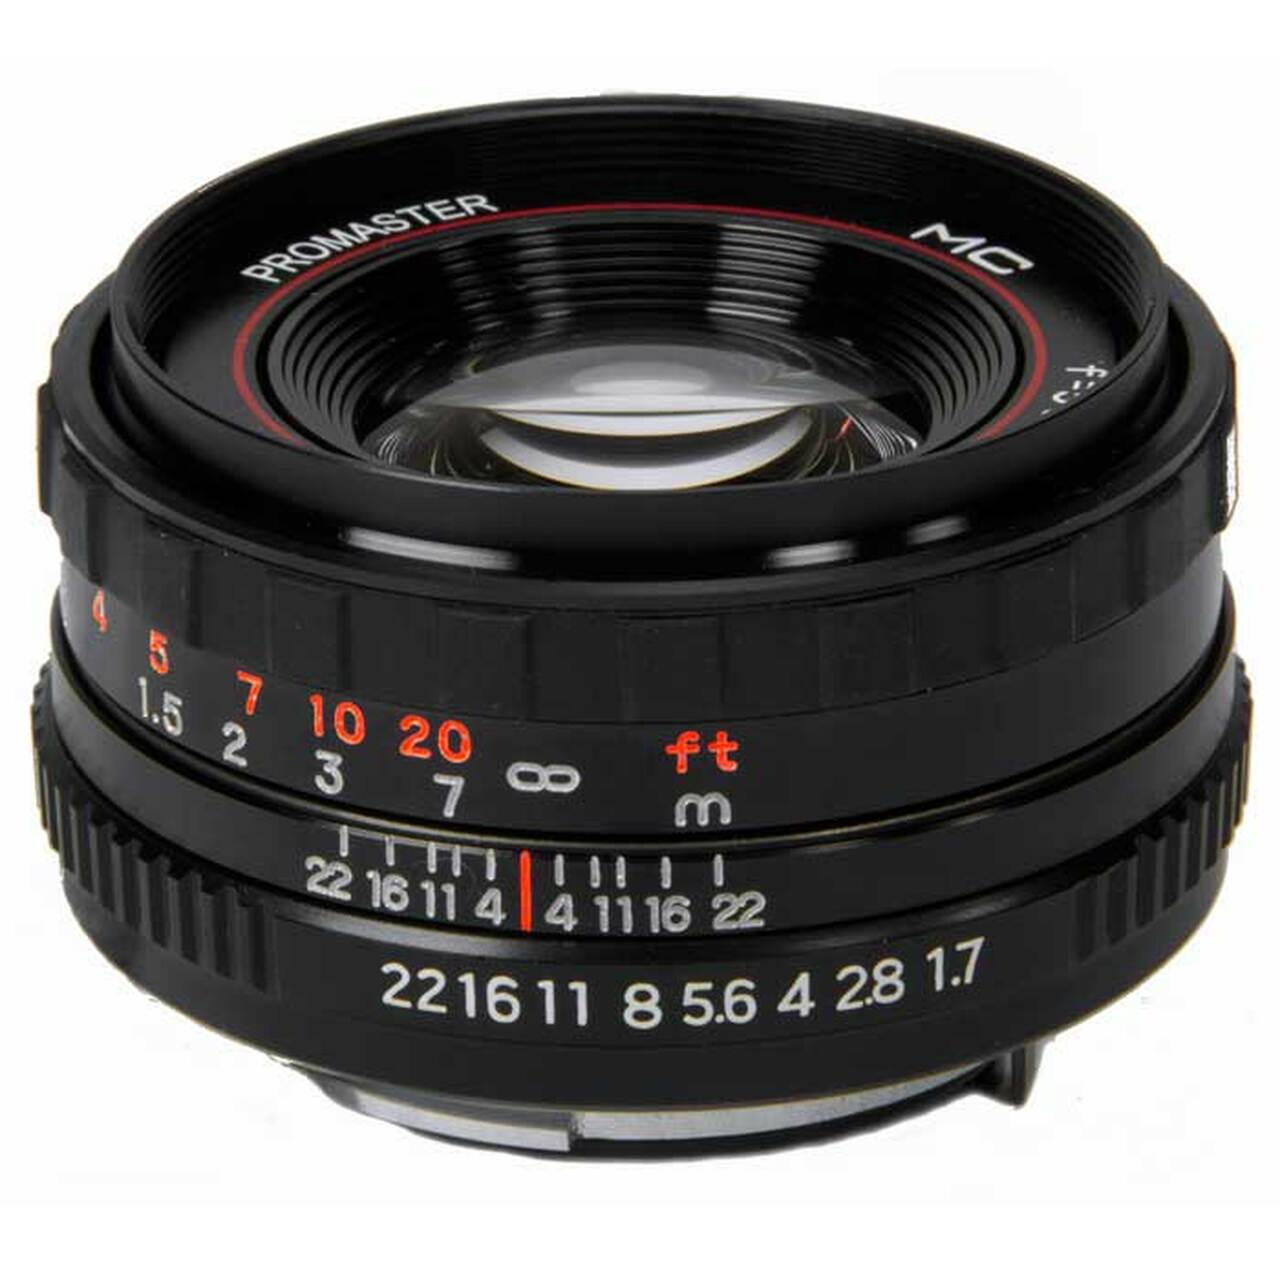 Promaster 2080 50mm F1.7 K-mount lens